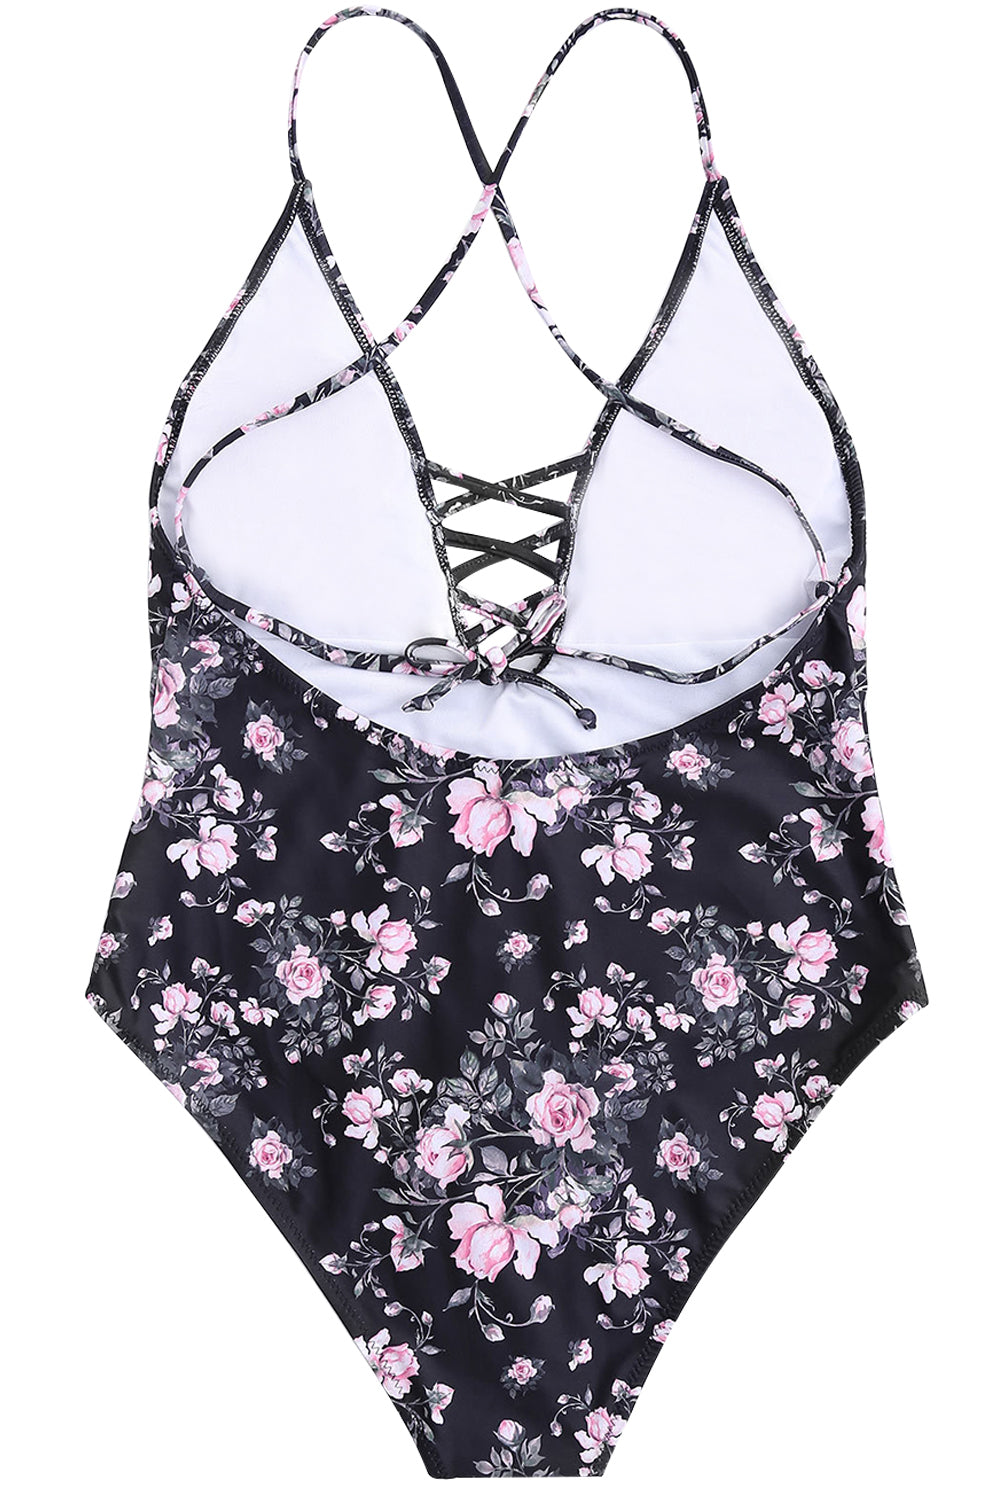 Iyasson Black Floral Printing Halter One-piece Swimsuit